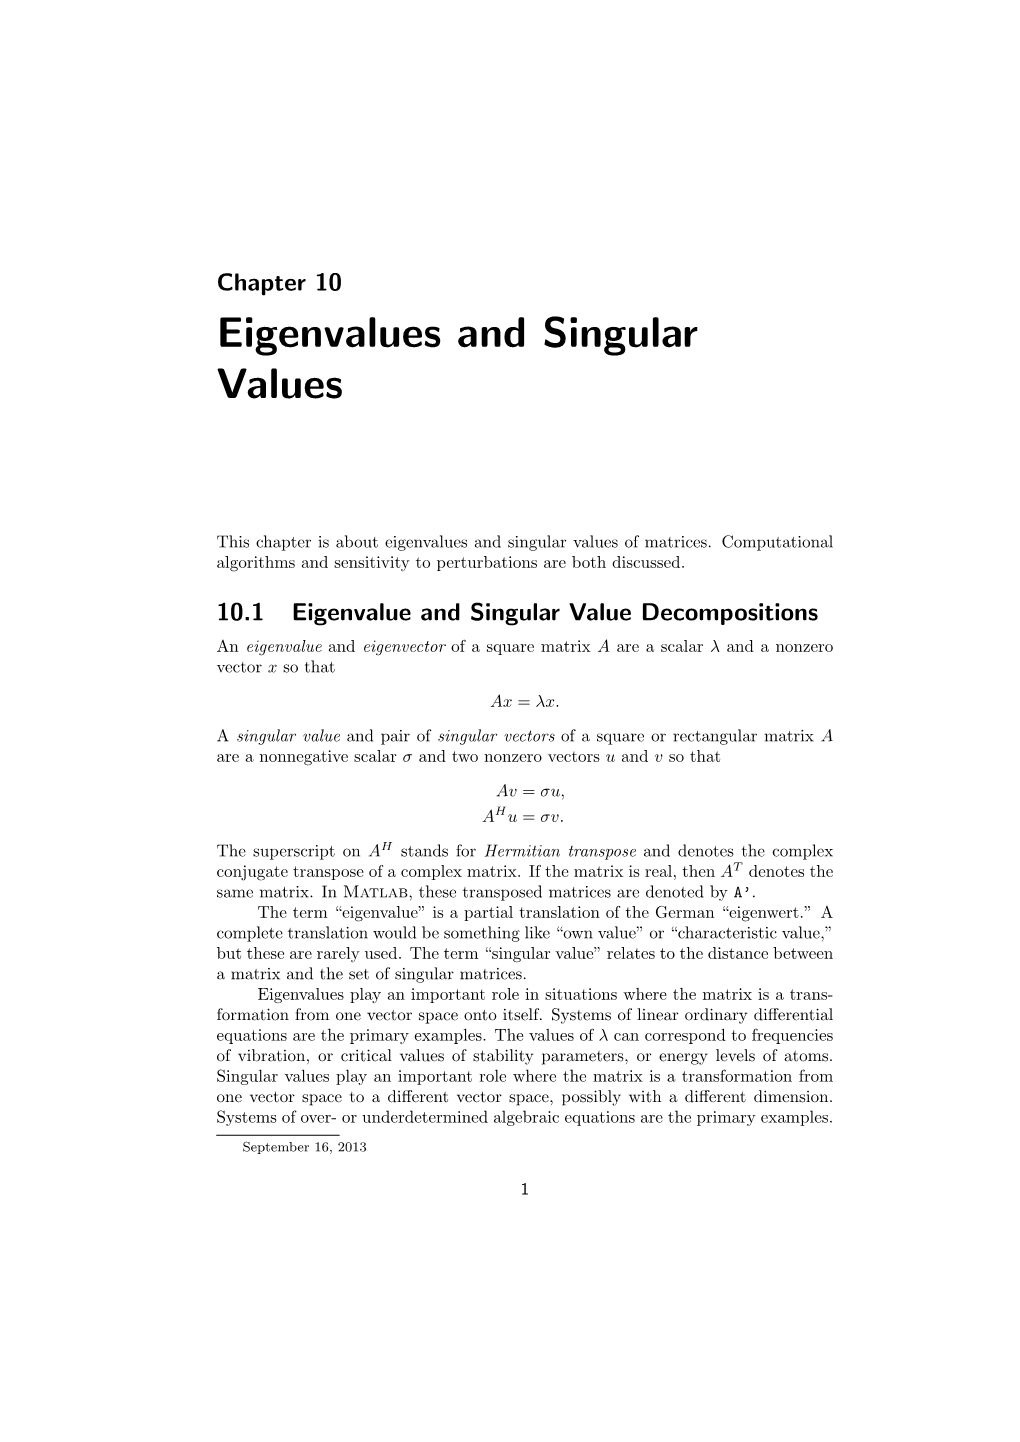 Eigenvalues and Singular Values